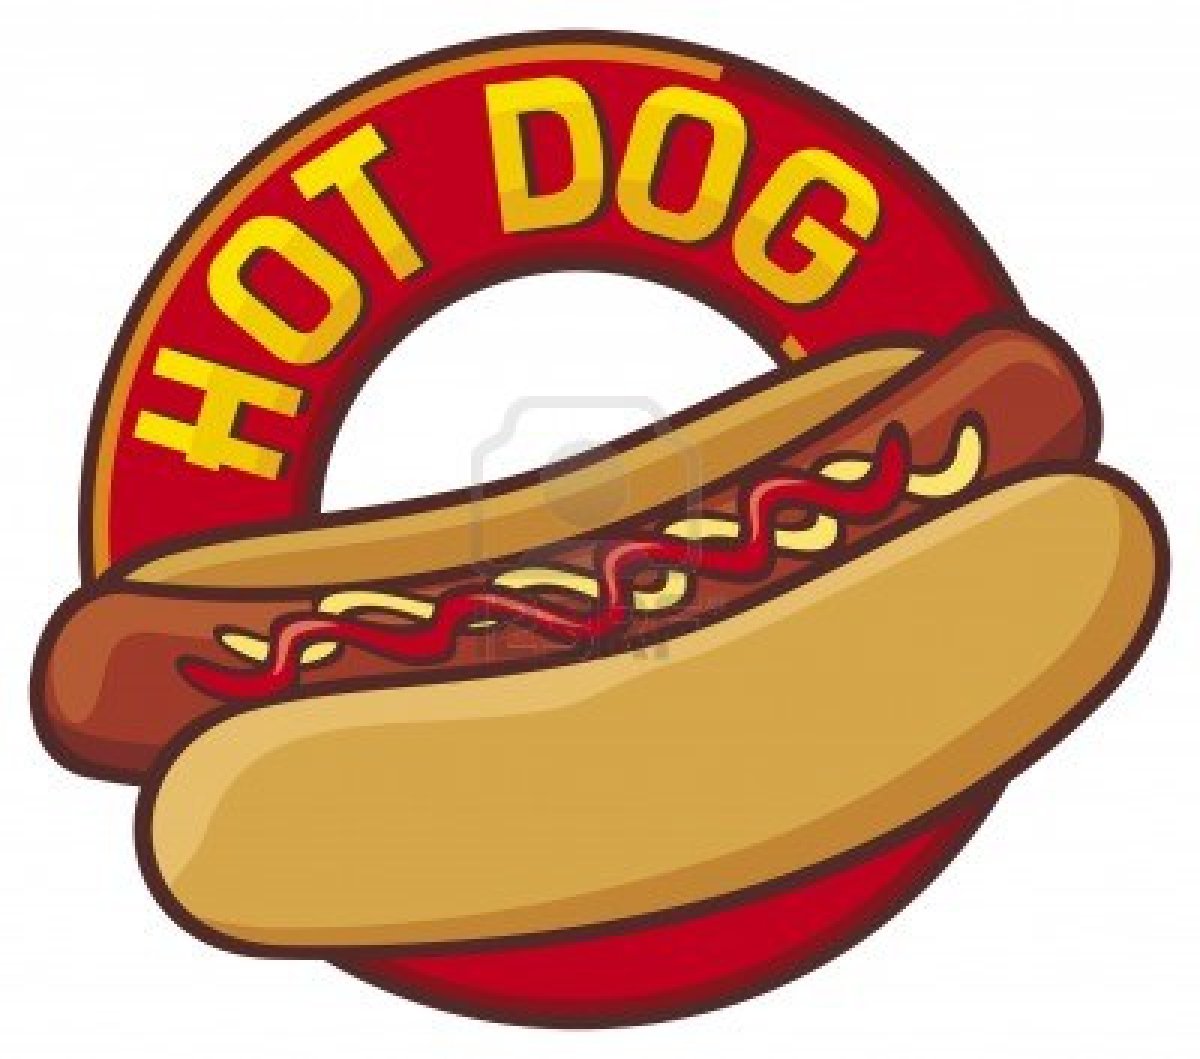 free hot dog clipart images - photo #39